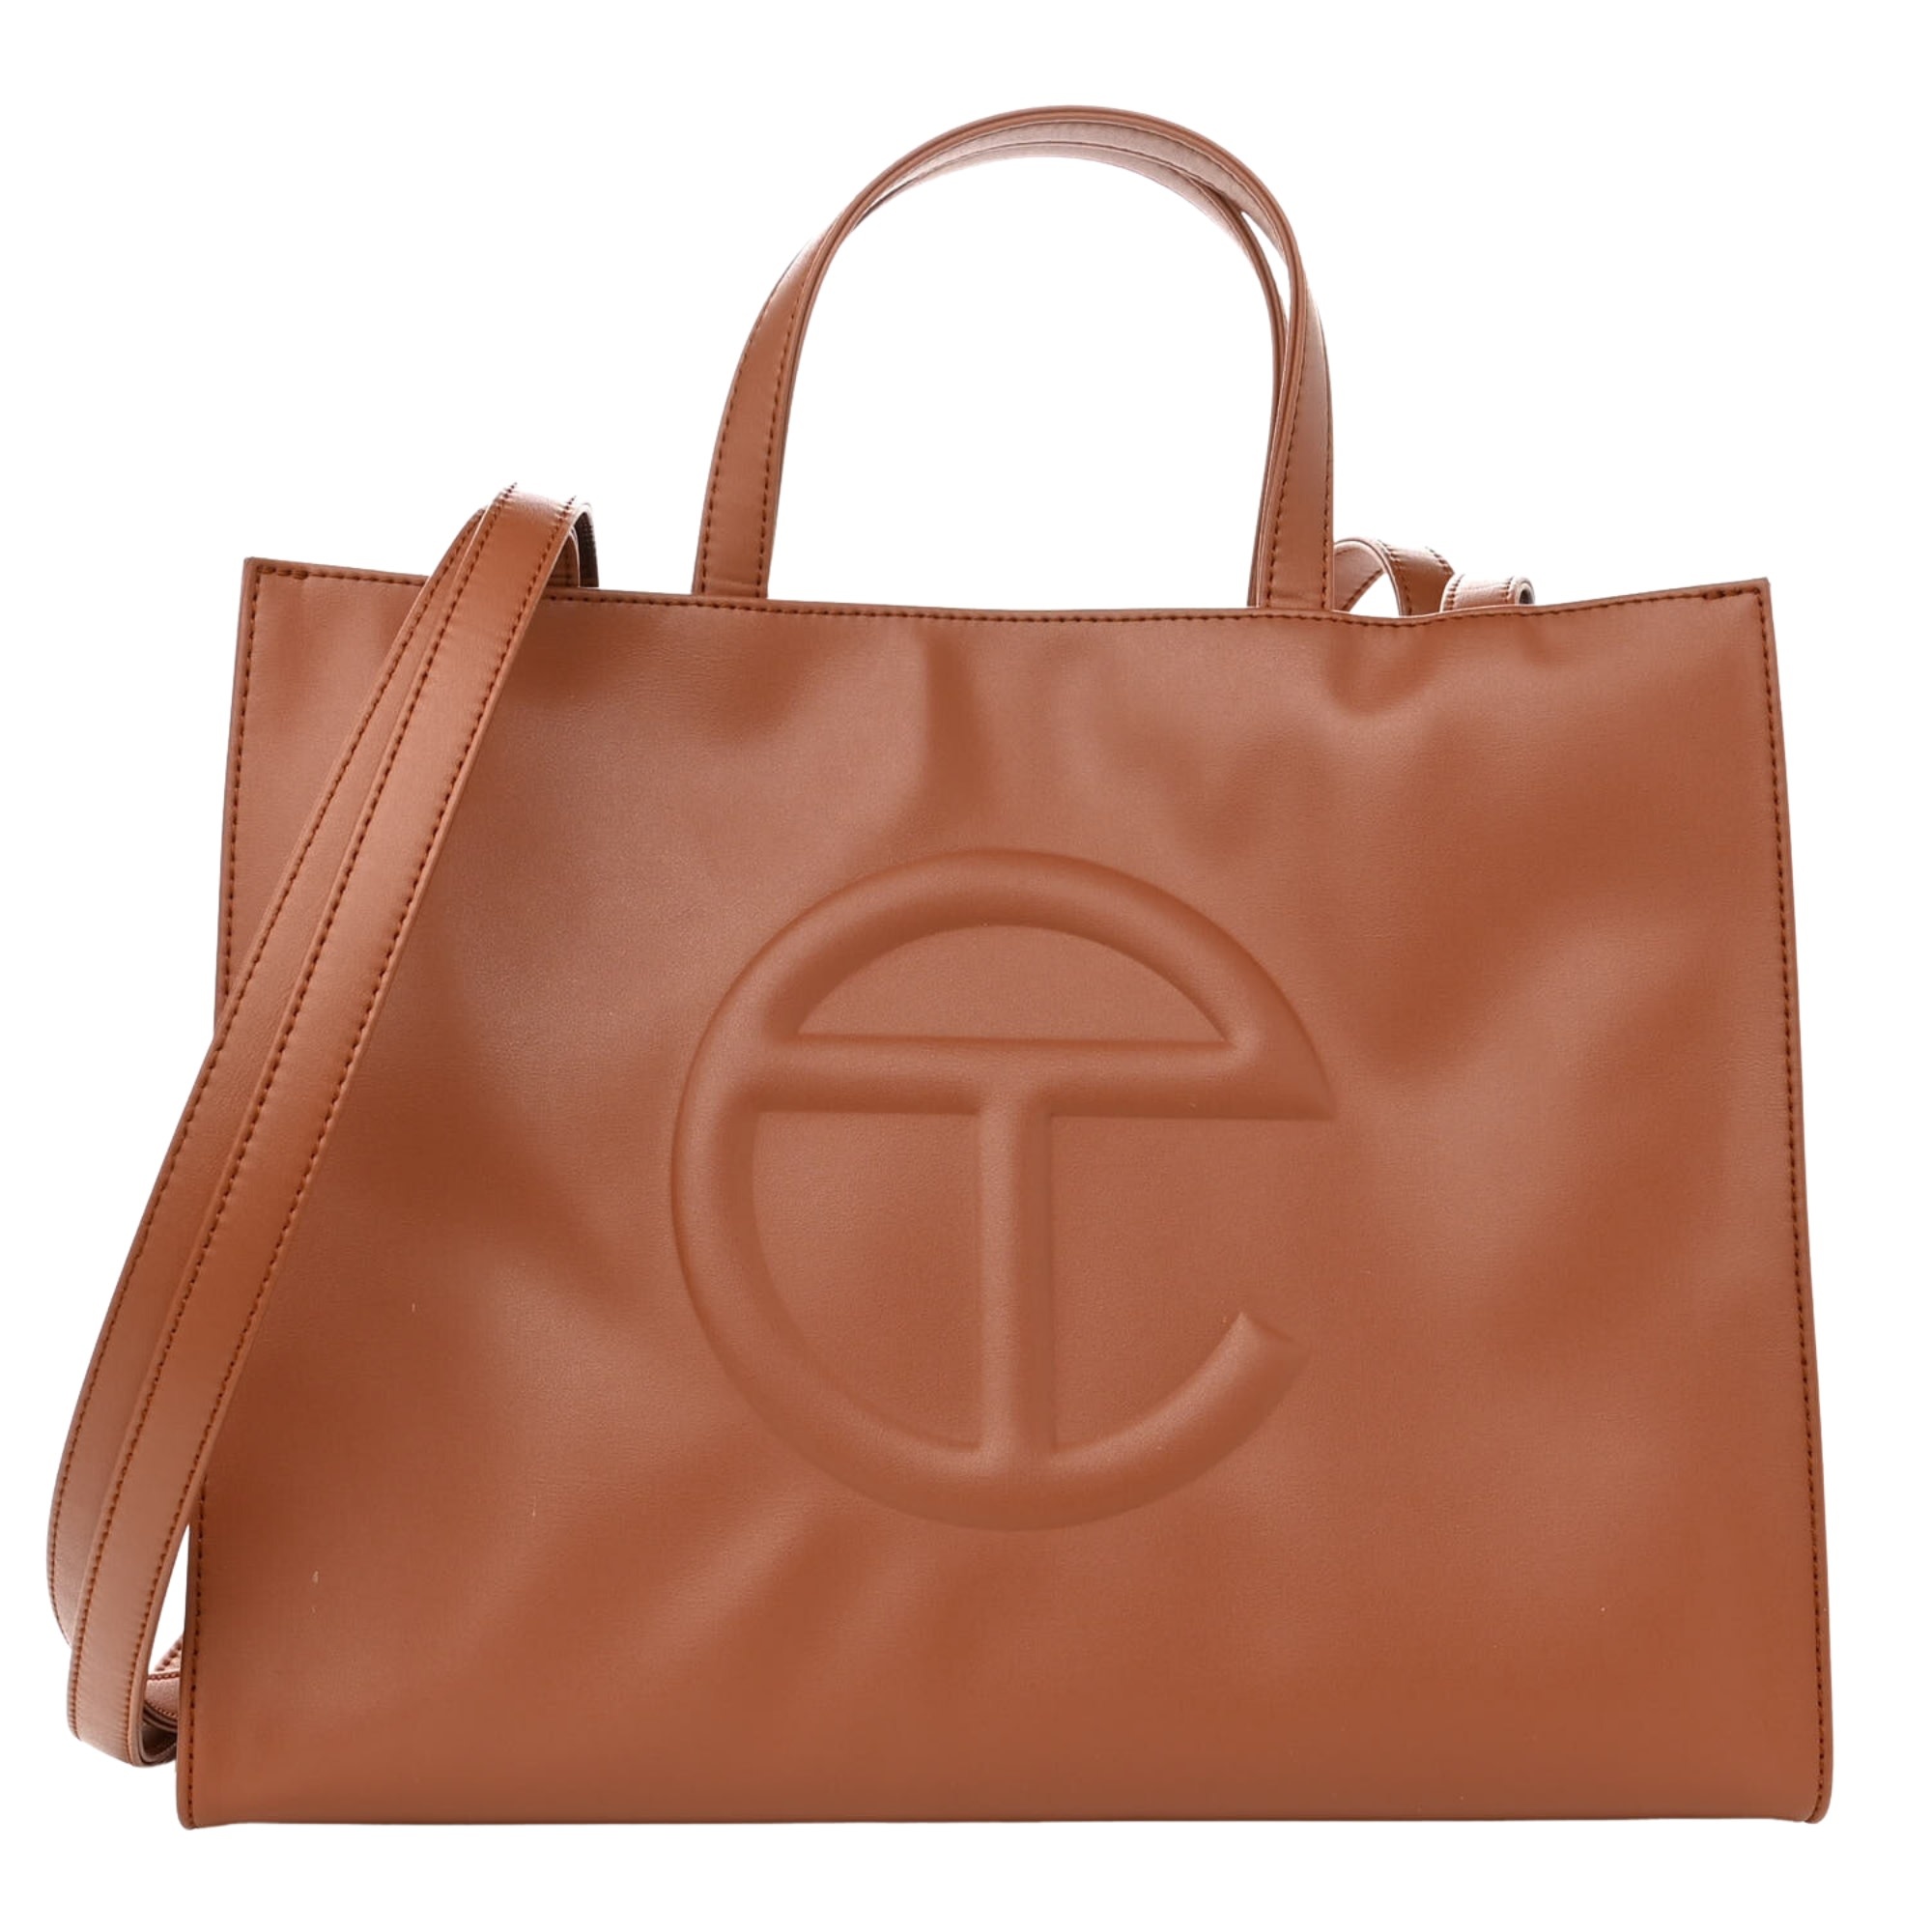 Which one: Telfar Medium Shopping Bag Vs. Marc Jacobs Medium